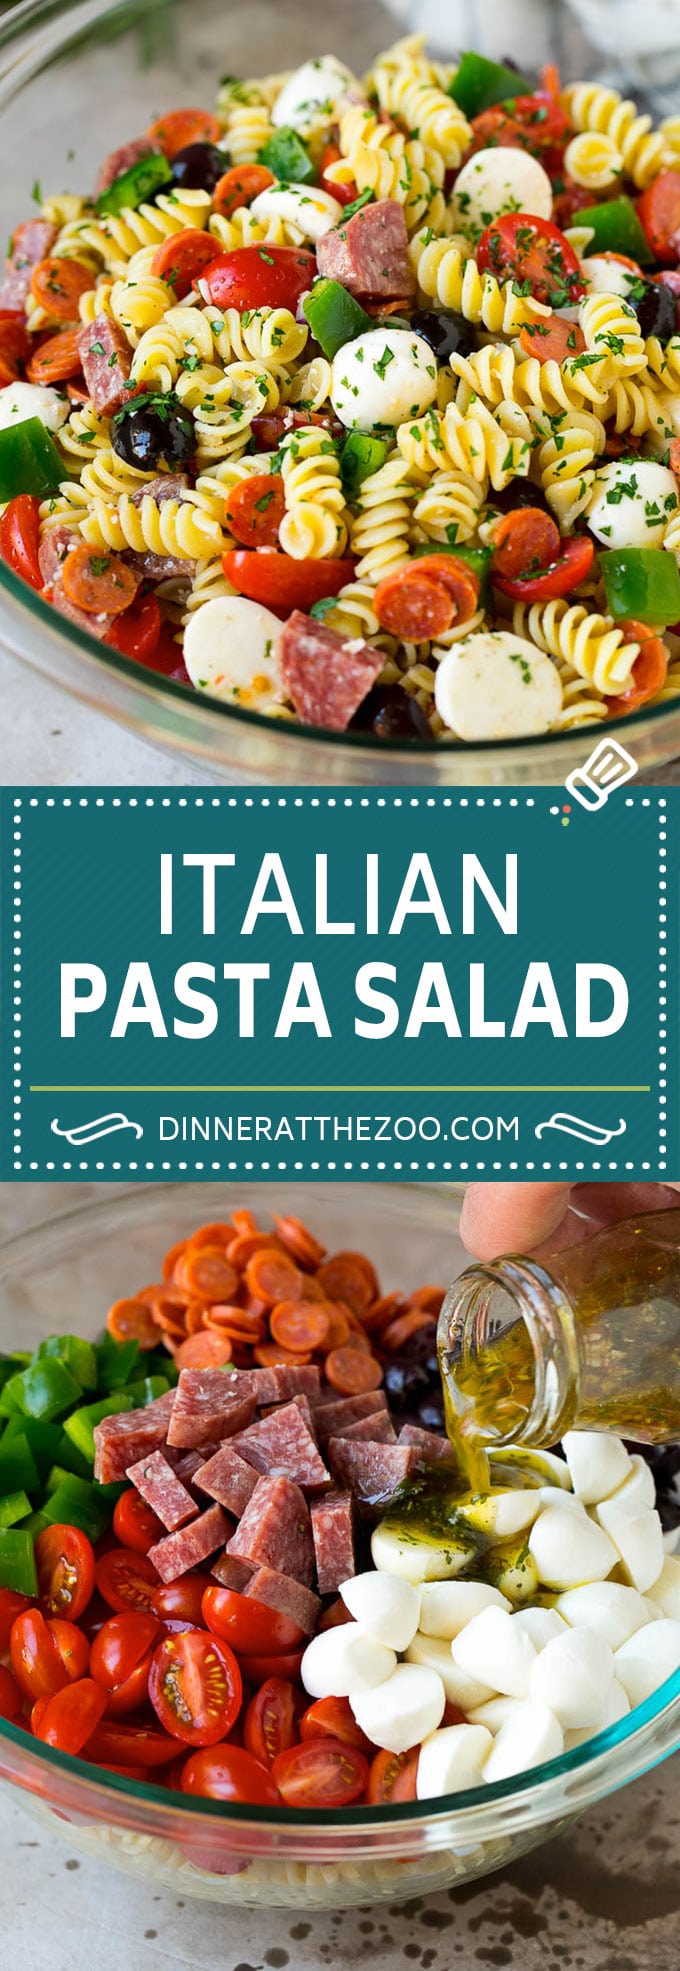 Italian Pasta Salad | Pasta Salad Recipe #pasta #salad #pastasalad #pepperoni #salami #olives #cheese #sidedish #dinneratthezoo